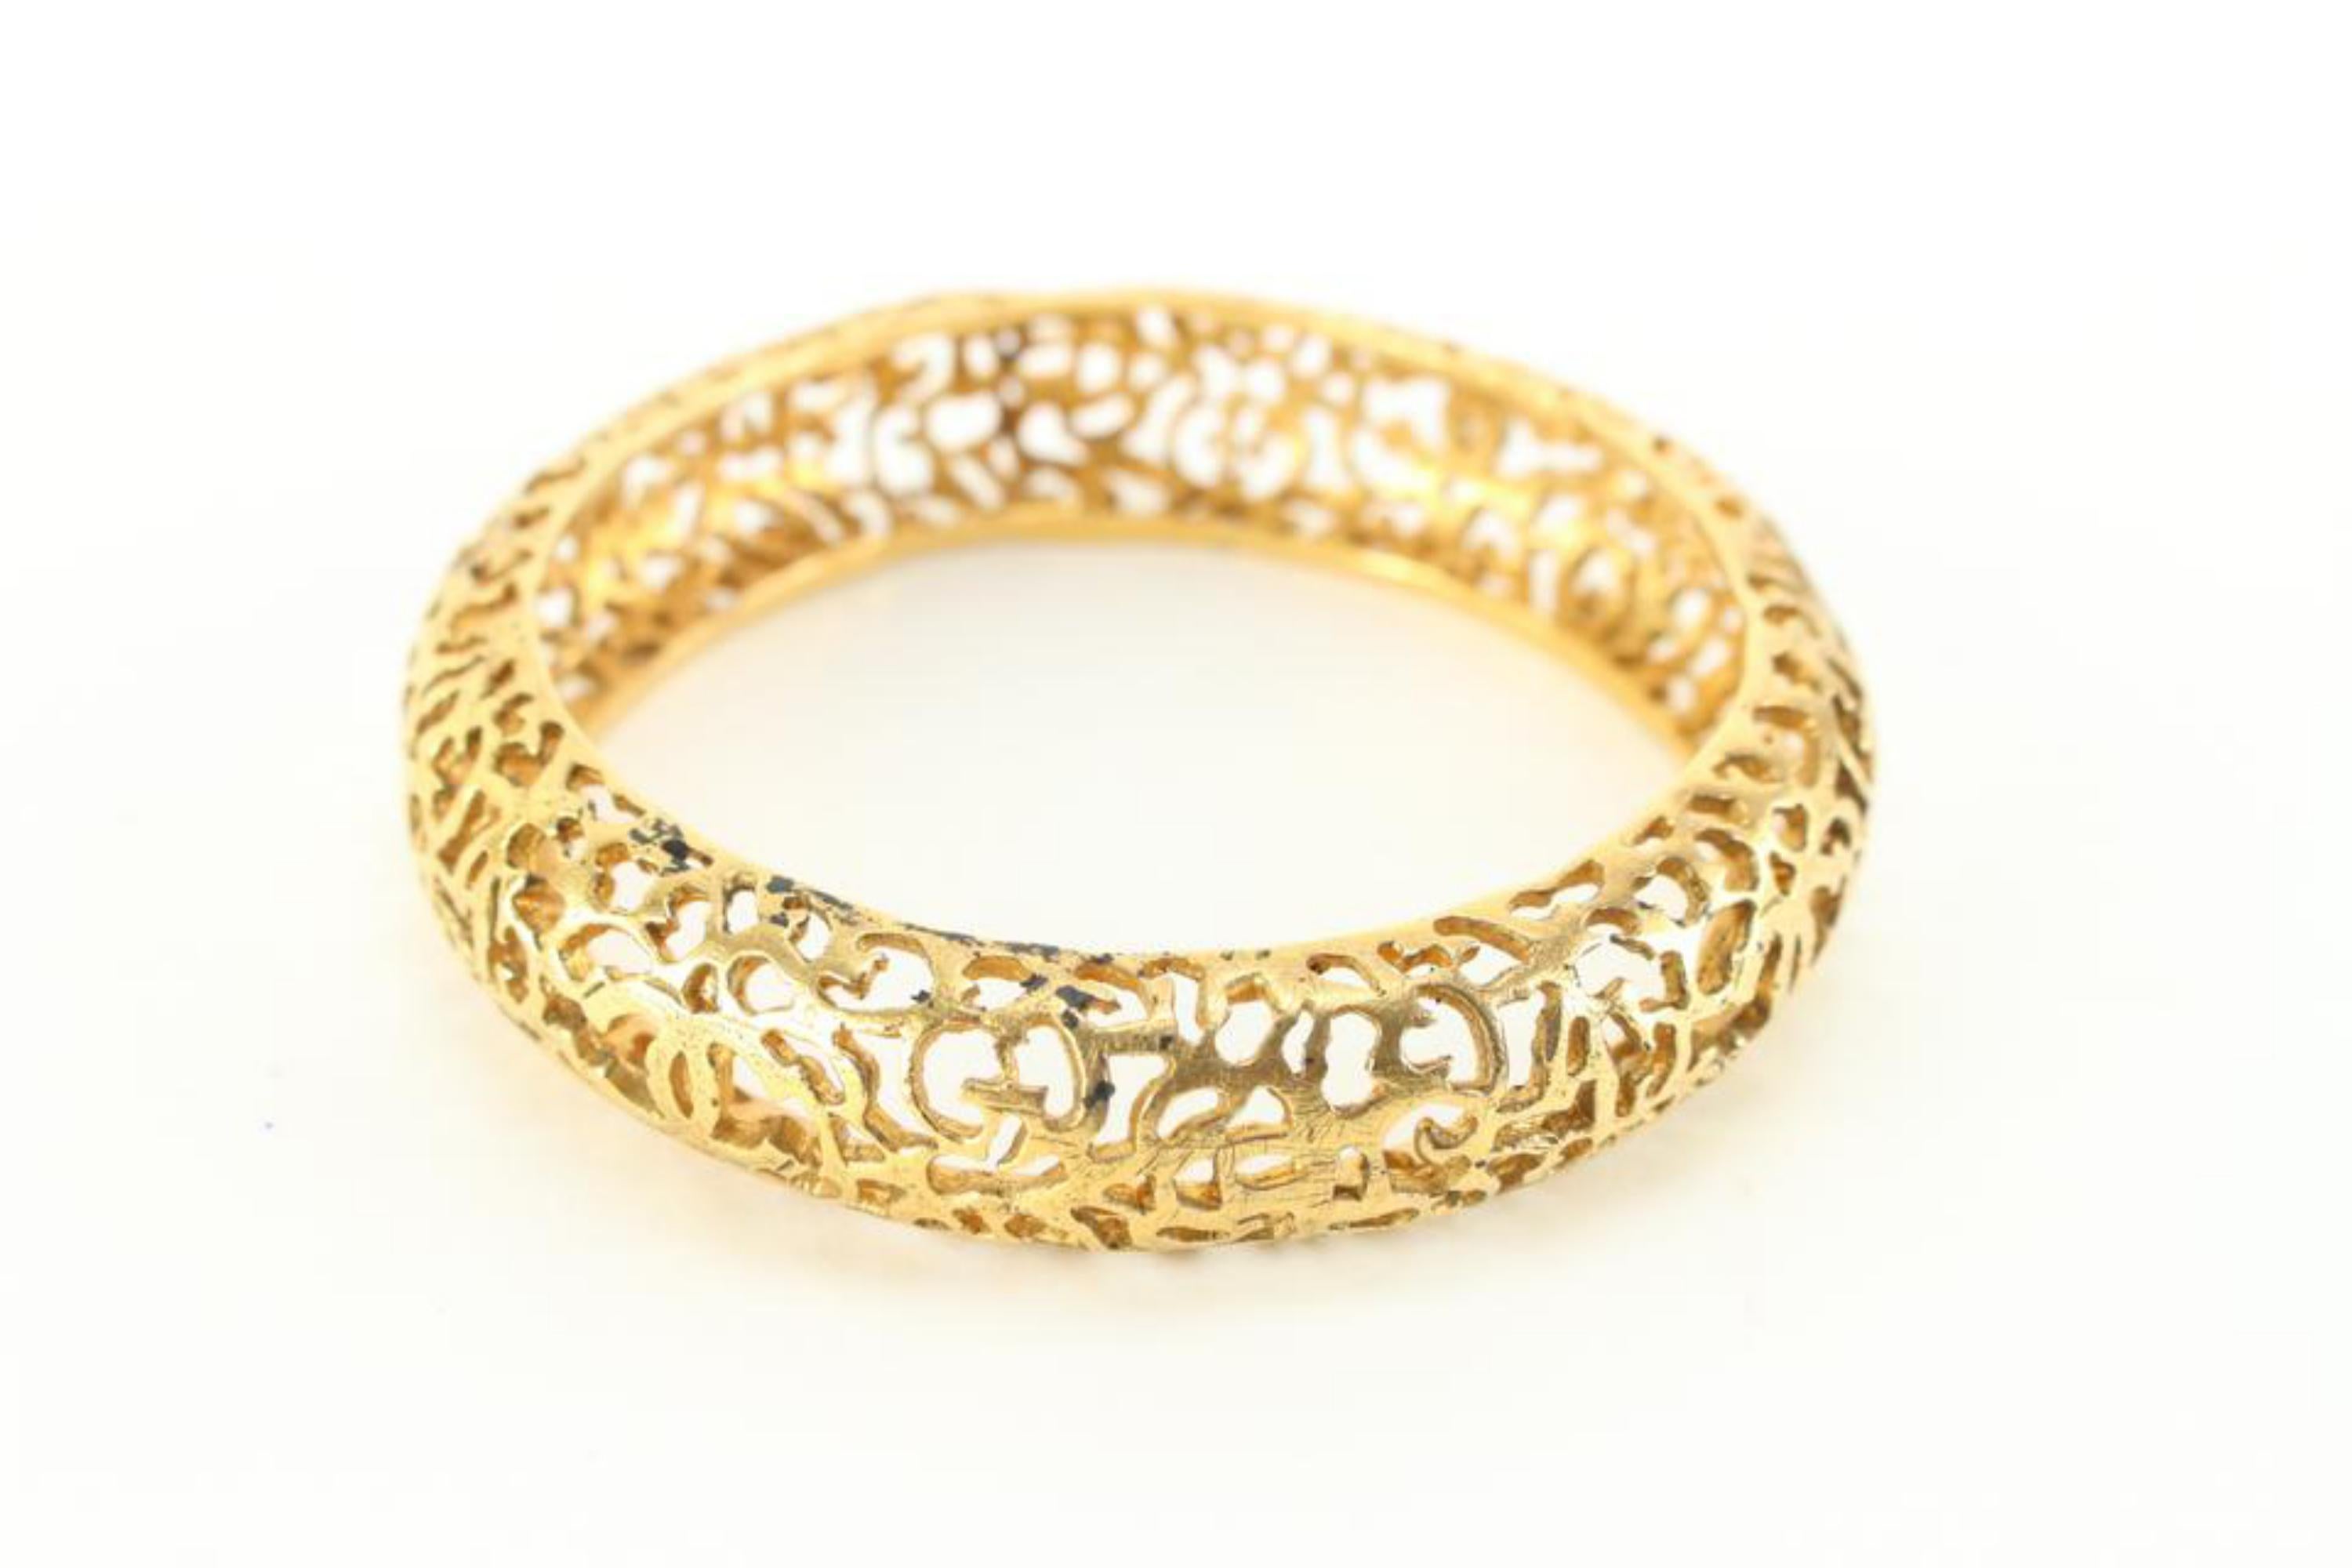 Chanel 24k Gold Plated Collection 25 CC Logo Bangle Bracelet 80ck817s For Sale 5